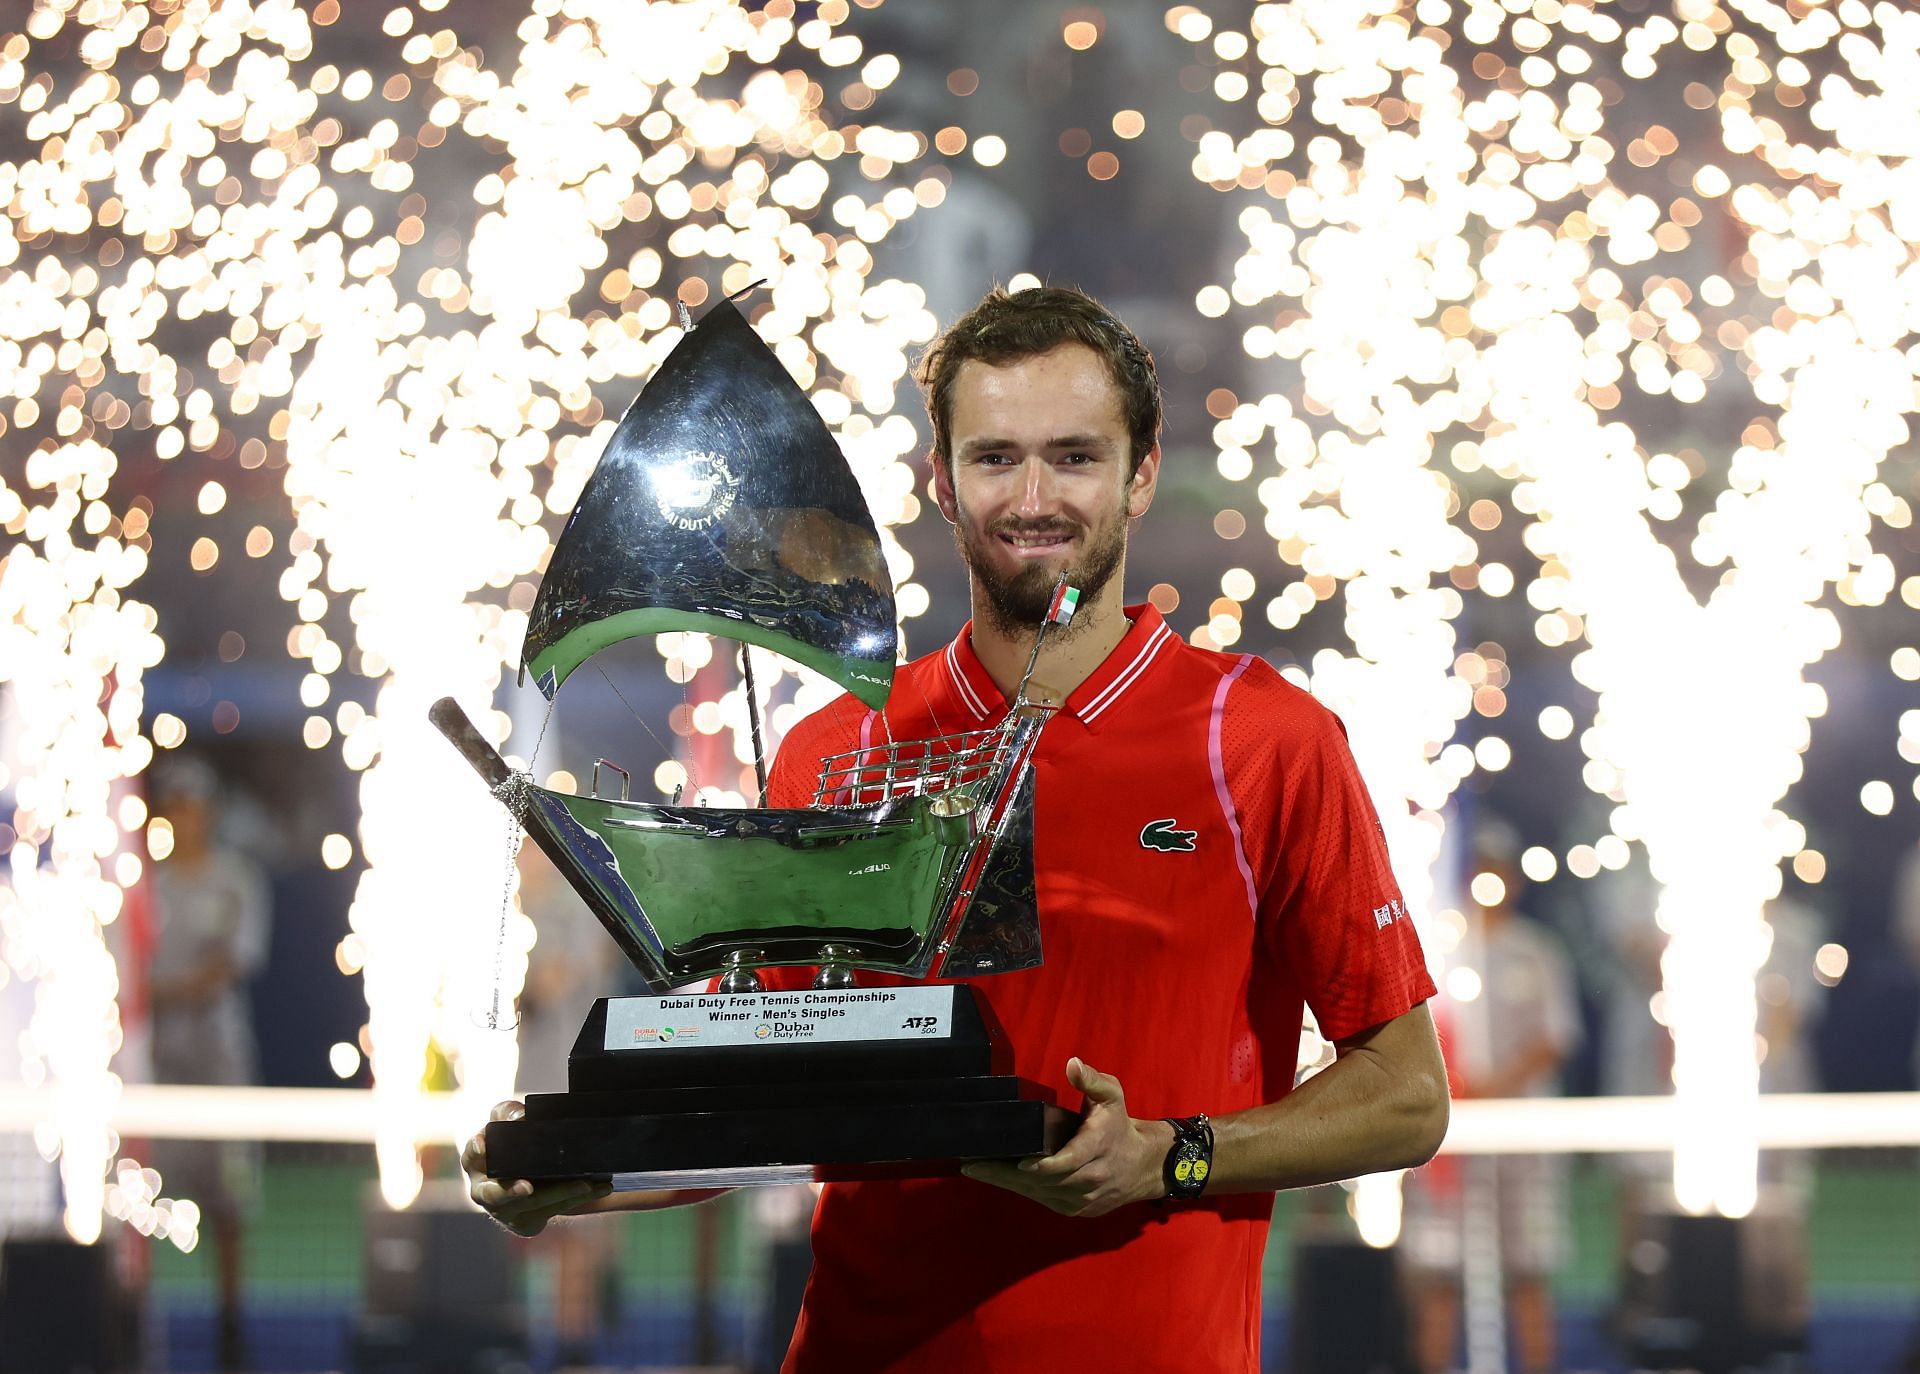 Medvedev wins the Dubai Tennis Championships